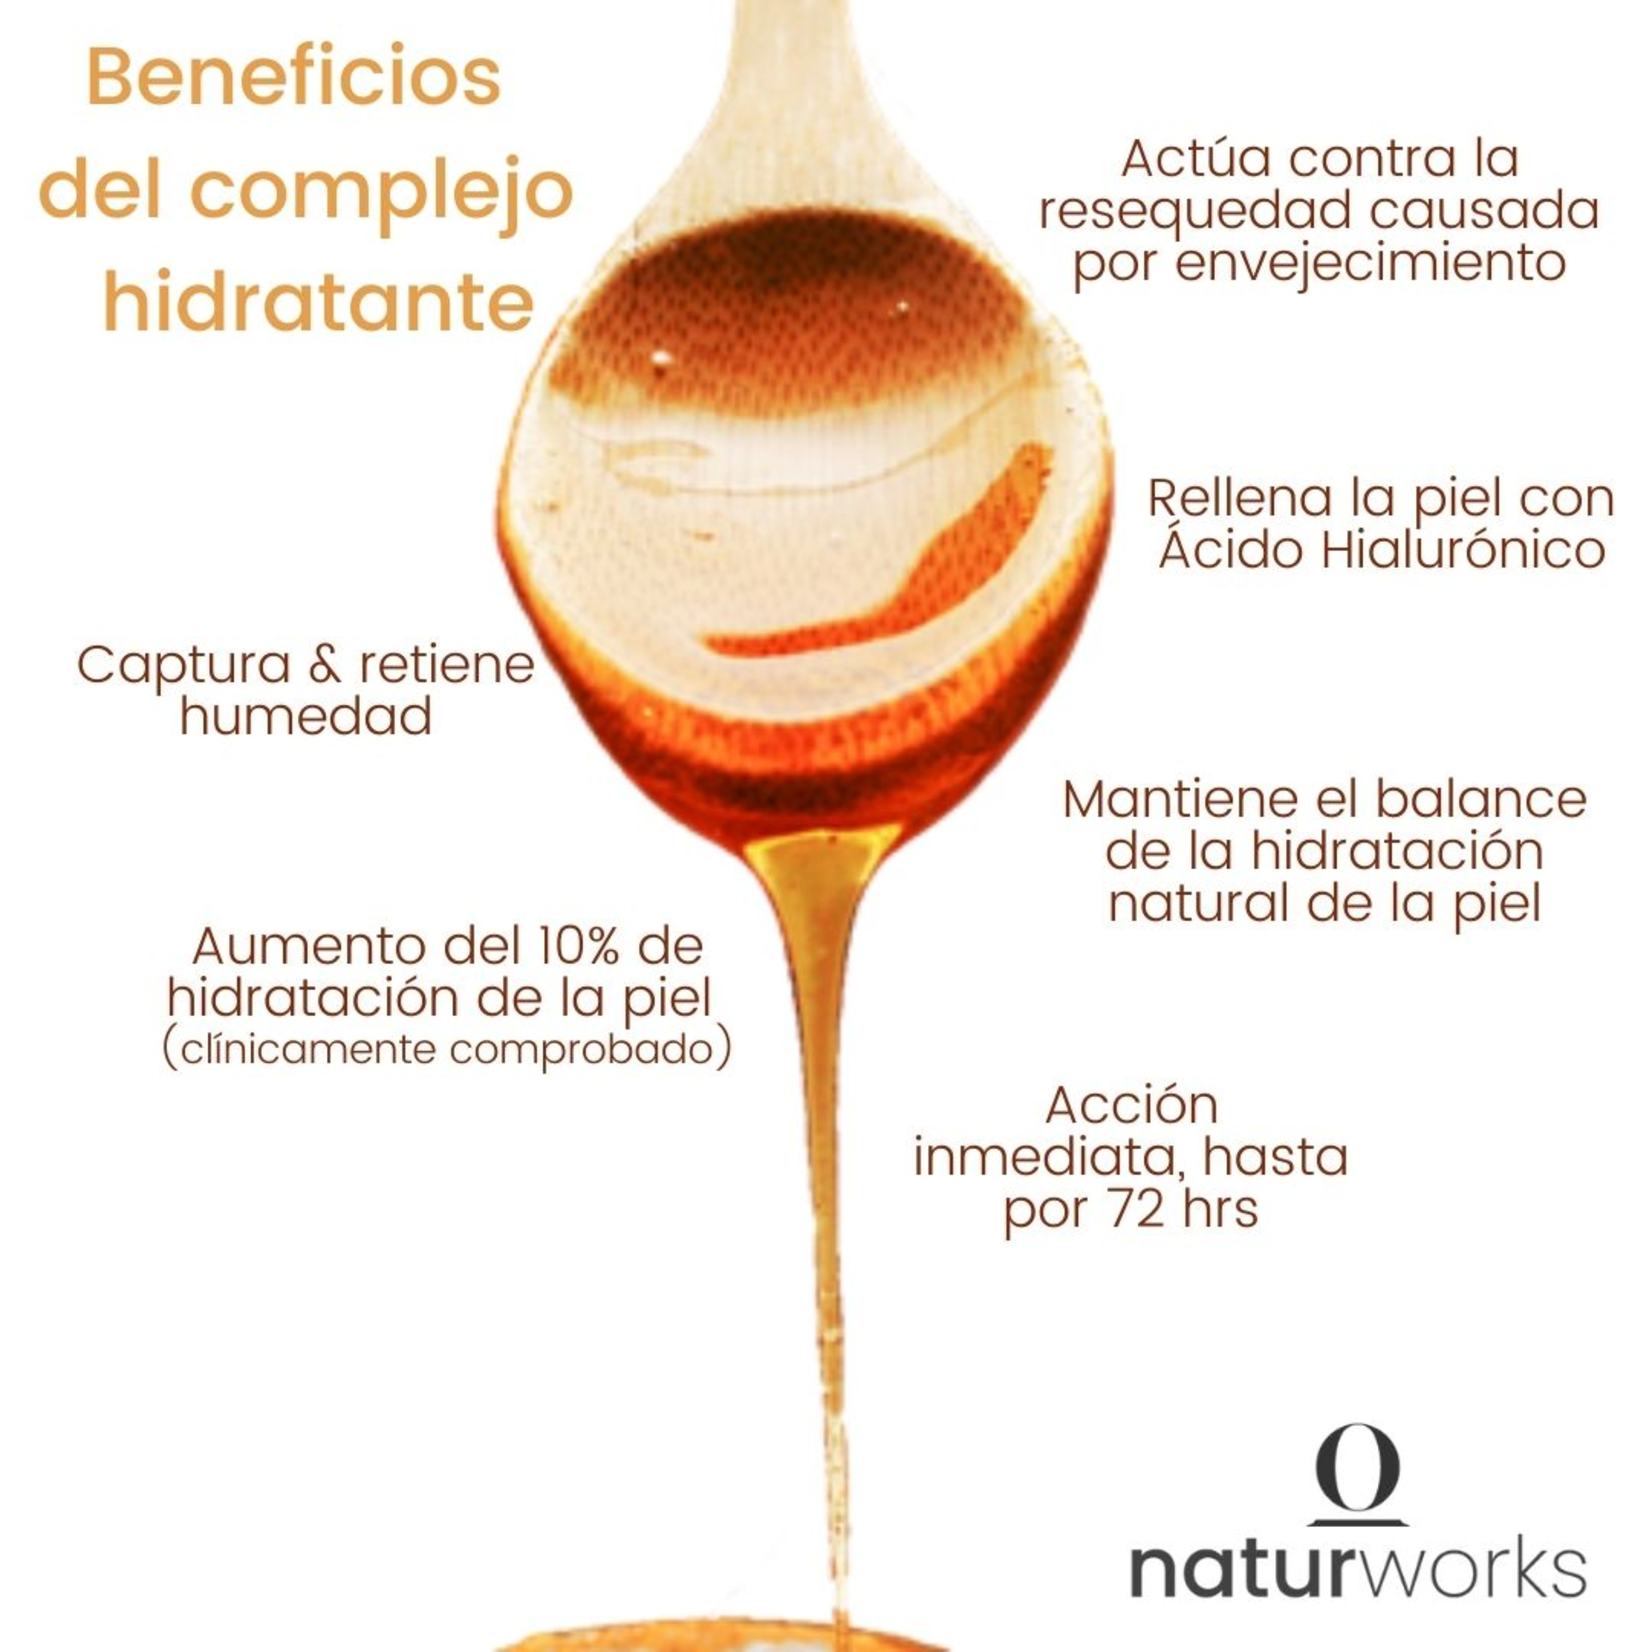 Naturworks Mascarilla capilar Naturworks hidratante con aceite de argan y aguacate 120 ml